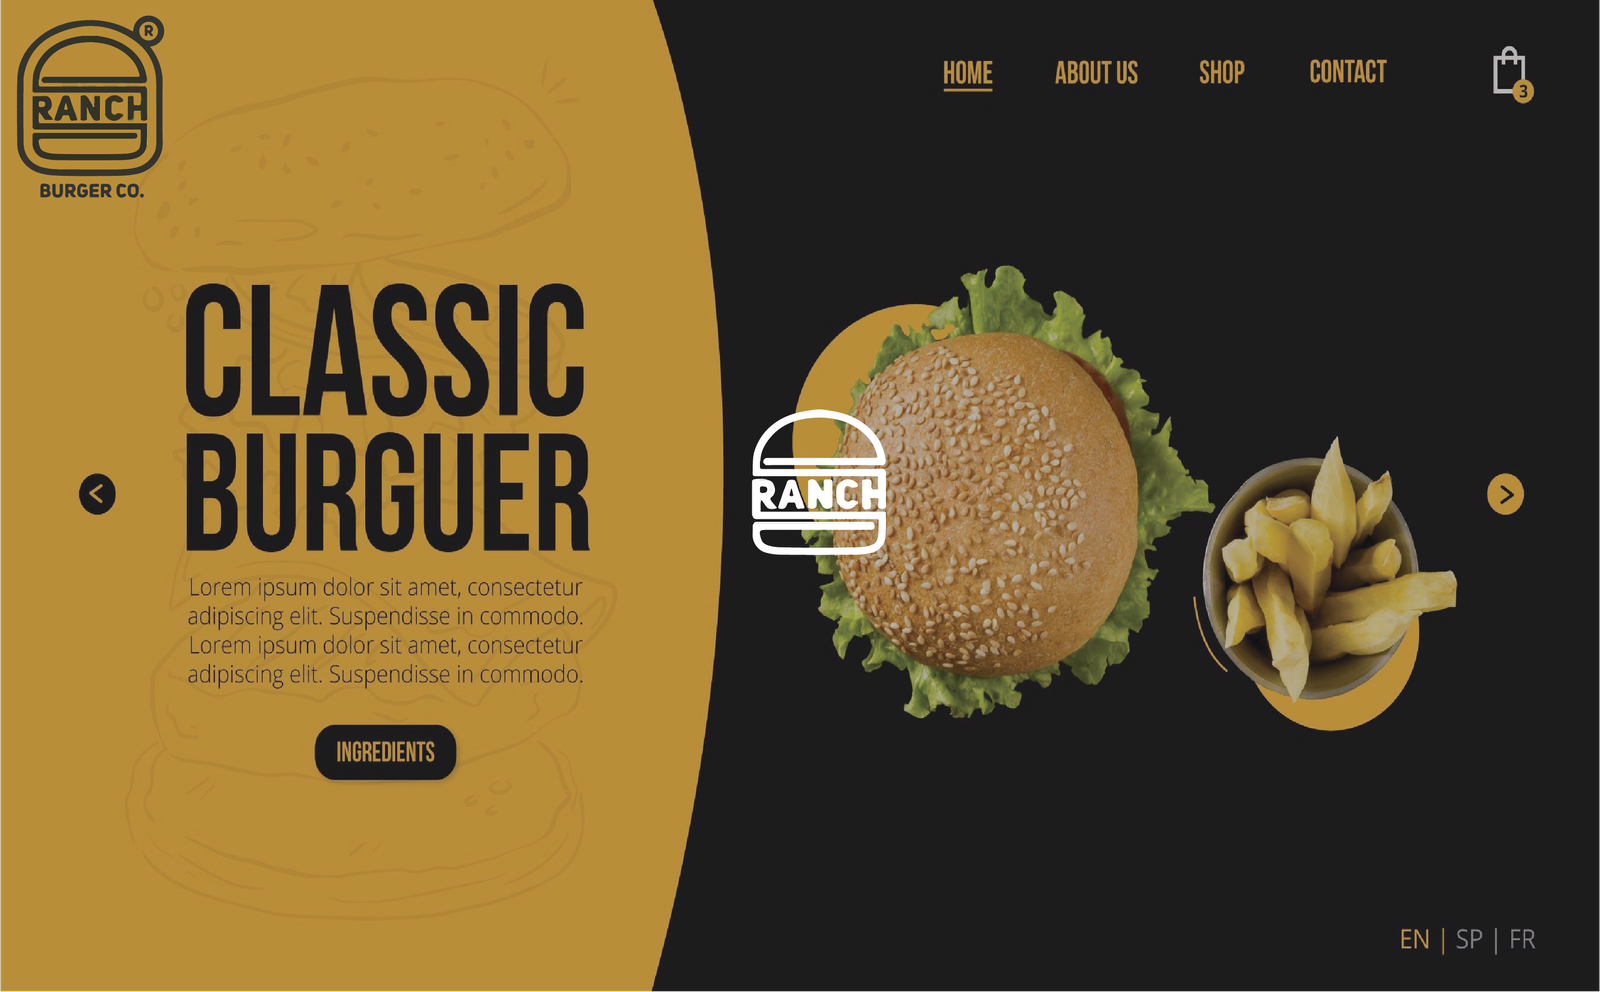 Burger company website